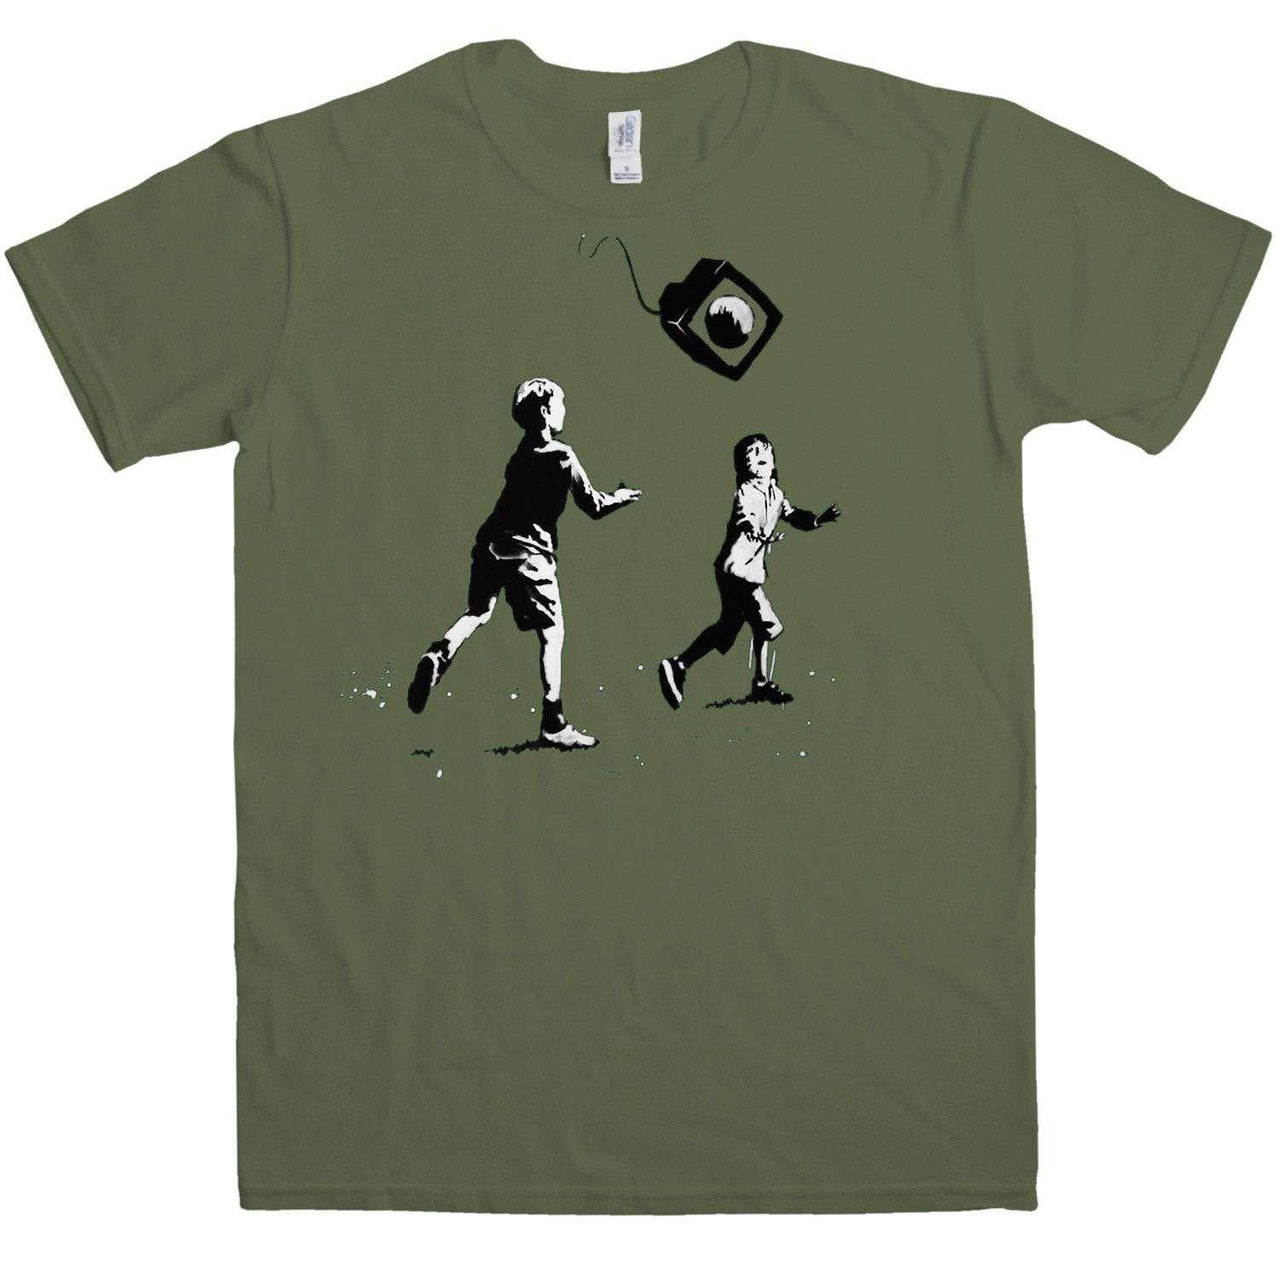 Banksy Throwing TV Graphic T-Shirt For Men 8Ball